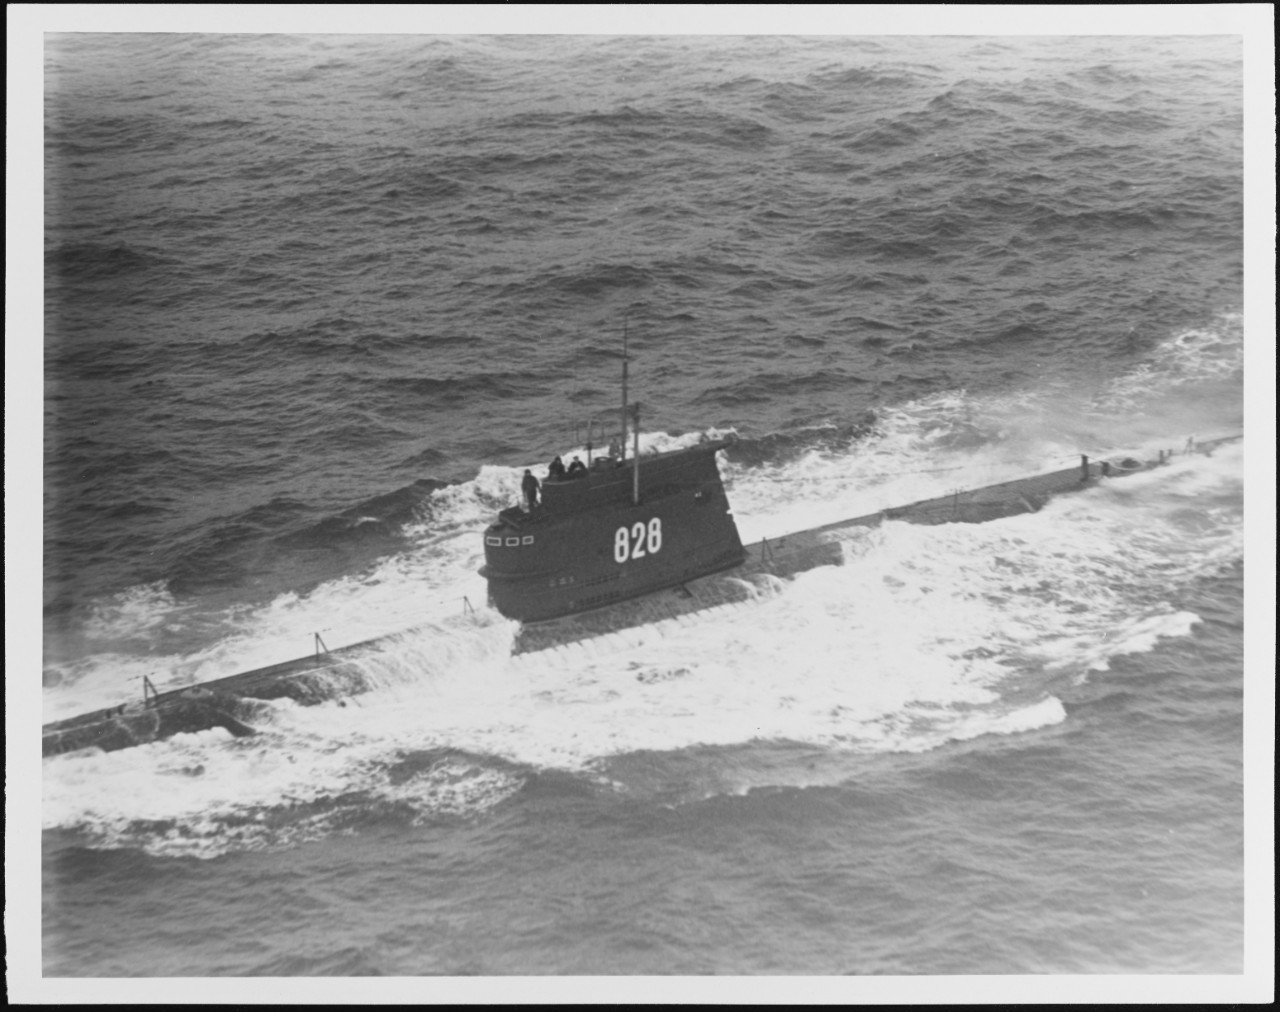 Soviet "Z" Class Submarine in 1968